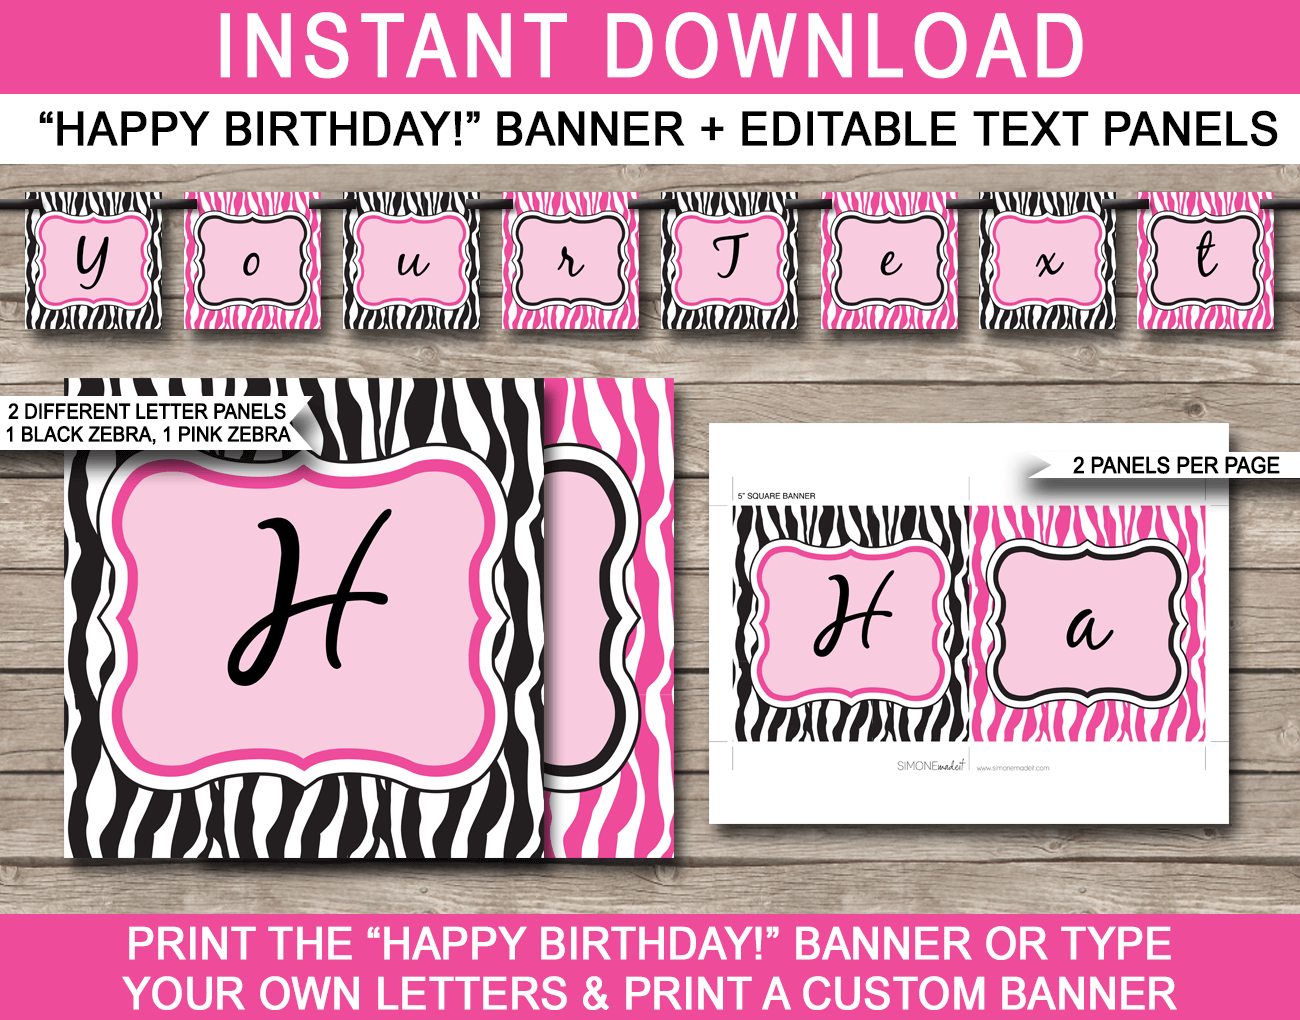 Pink Zebra Birthday Banner Template - Pink Zebra Bunting - Girls Happy Birthday Banner - Birthday Party - Editable and Printable DIY Template - INSTANT DOWNLOAD $4.50 via simonemadeit.com